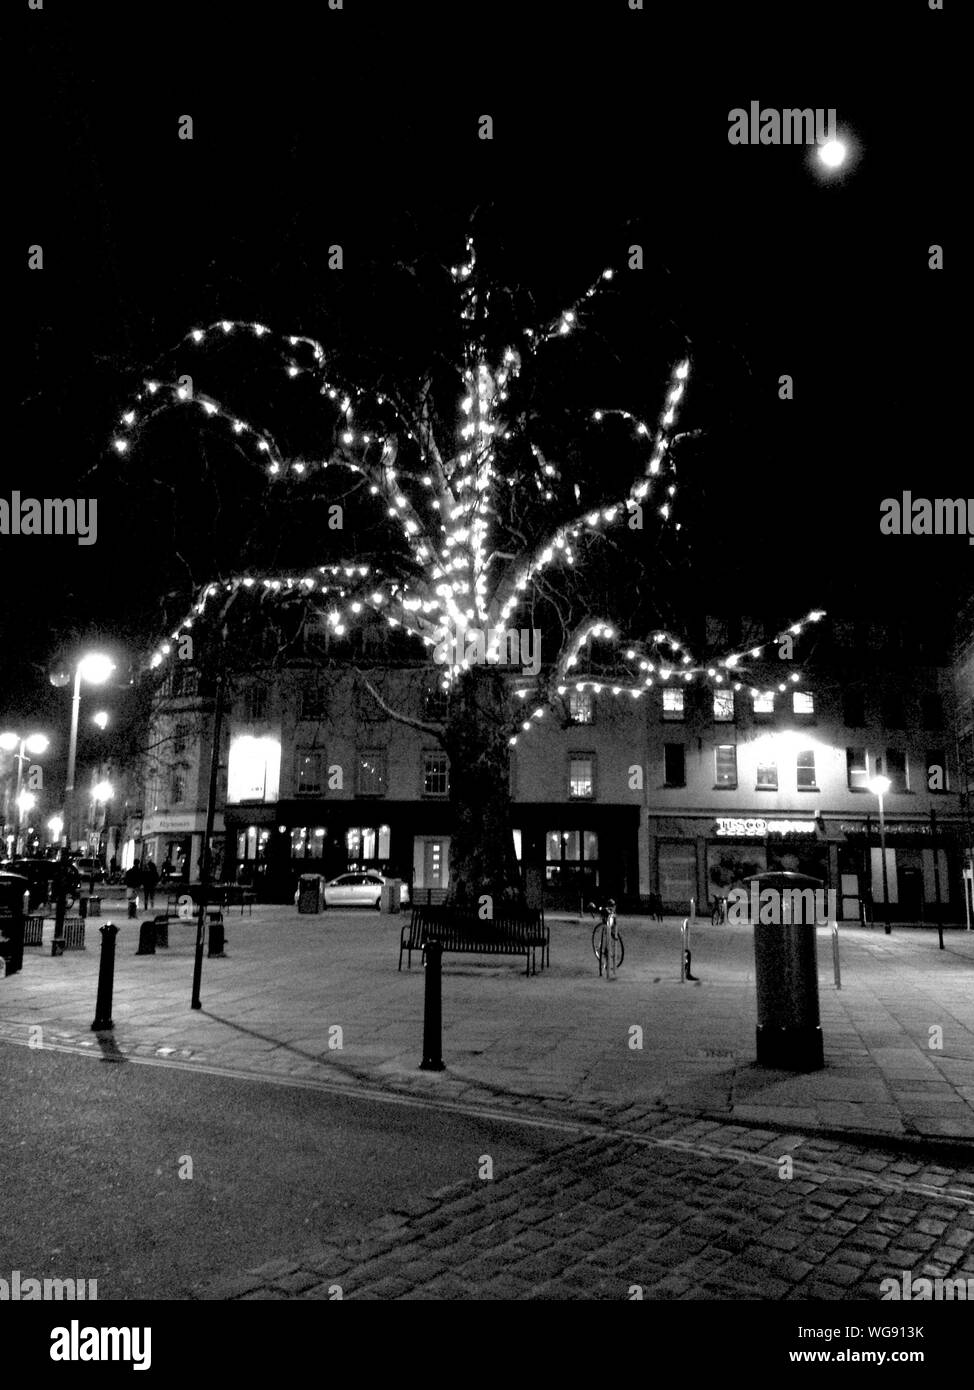 Illuminated Lighting Decoration On Tree At Kingsmead Square Stock Photo